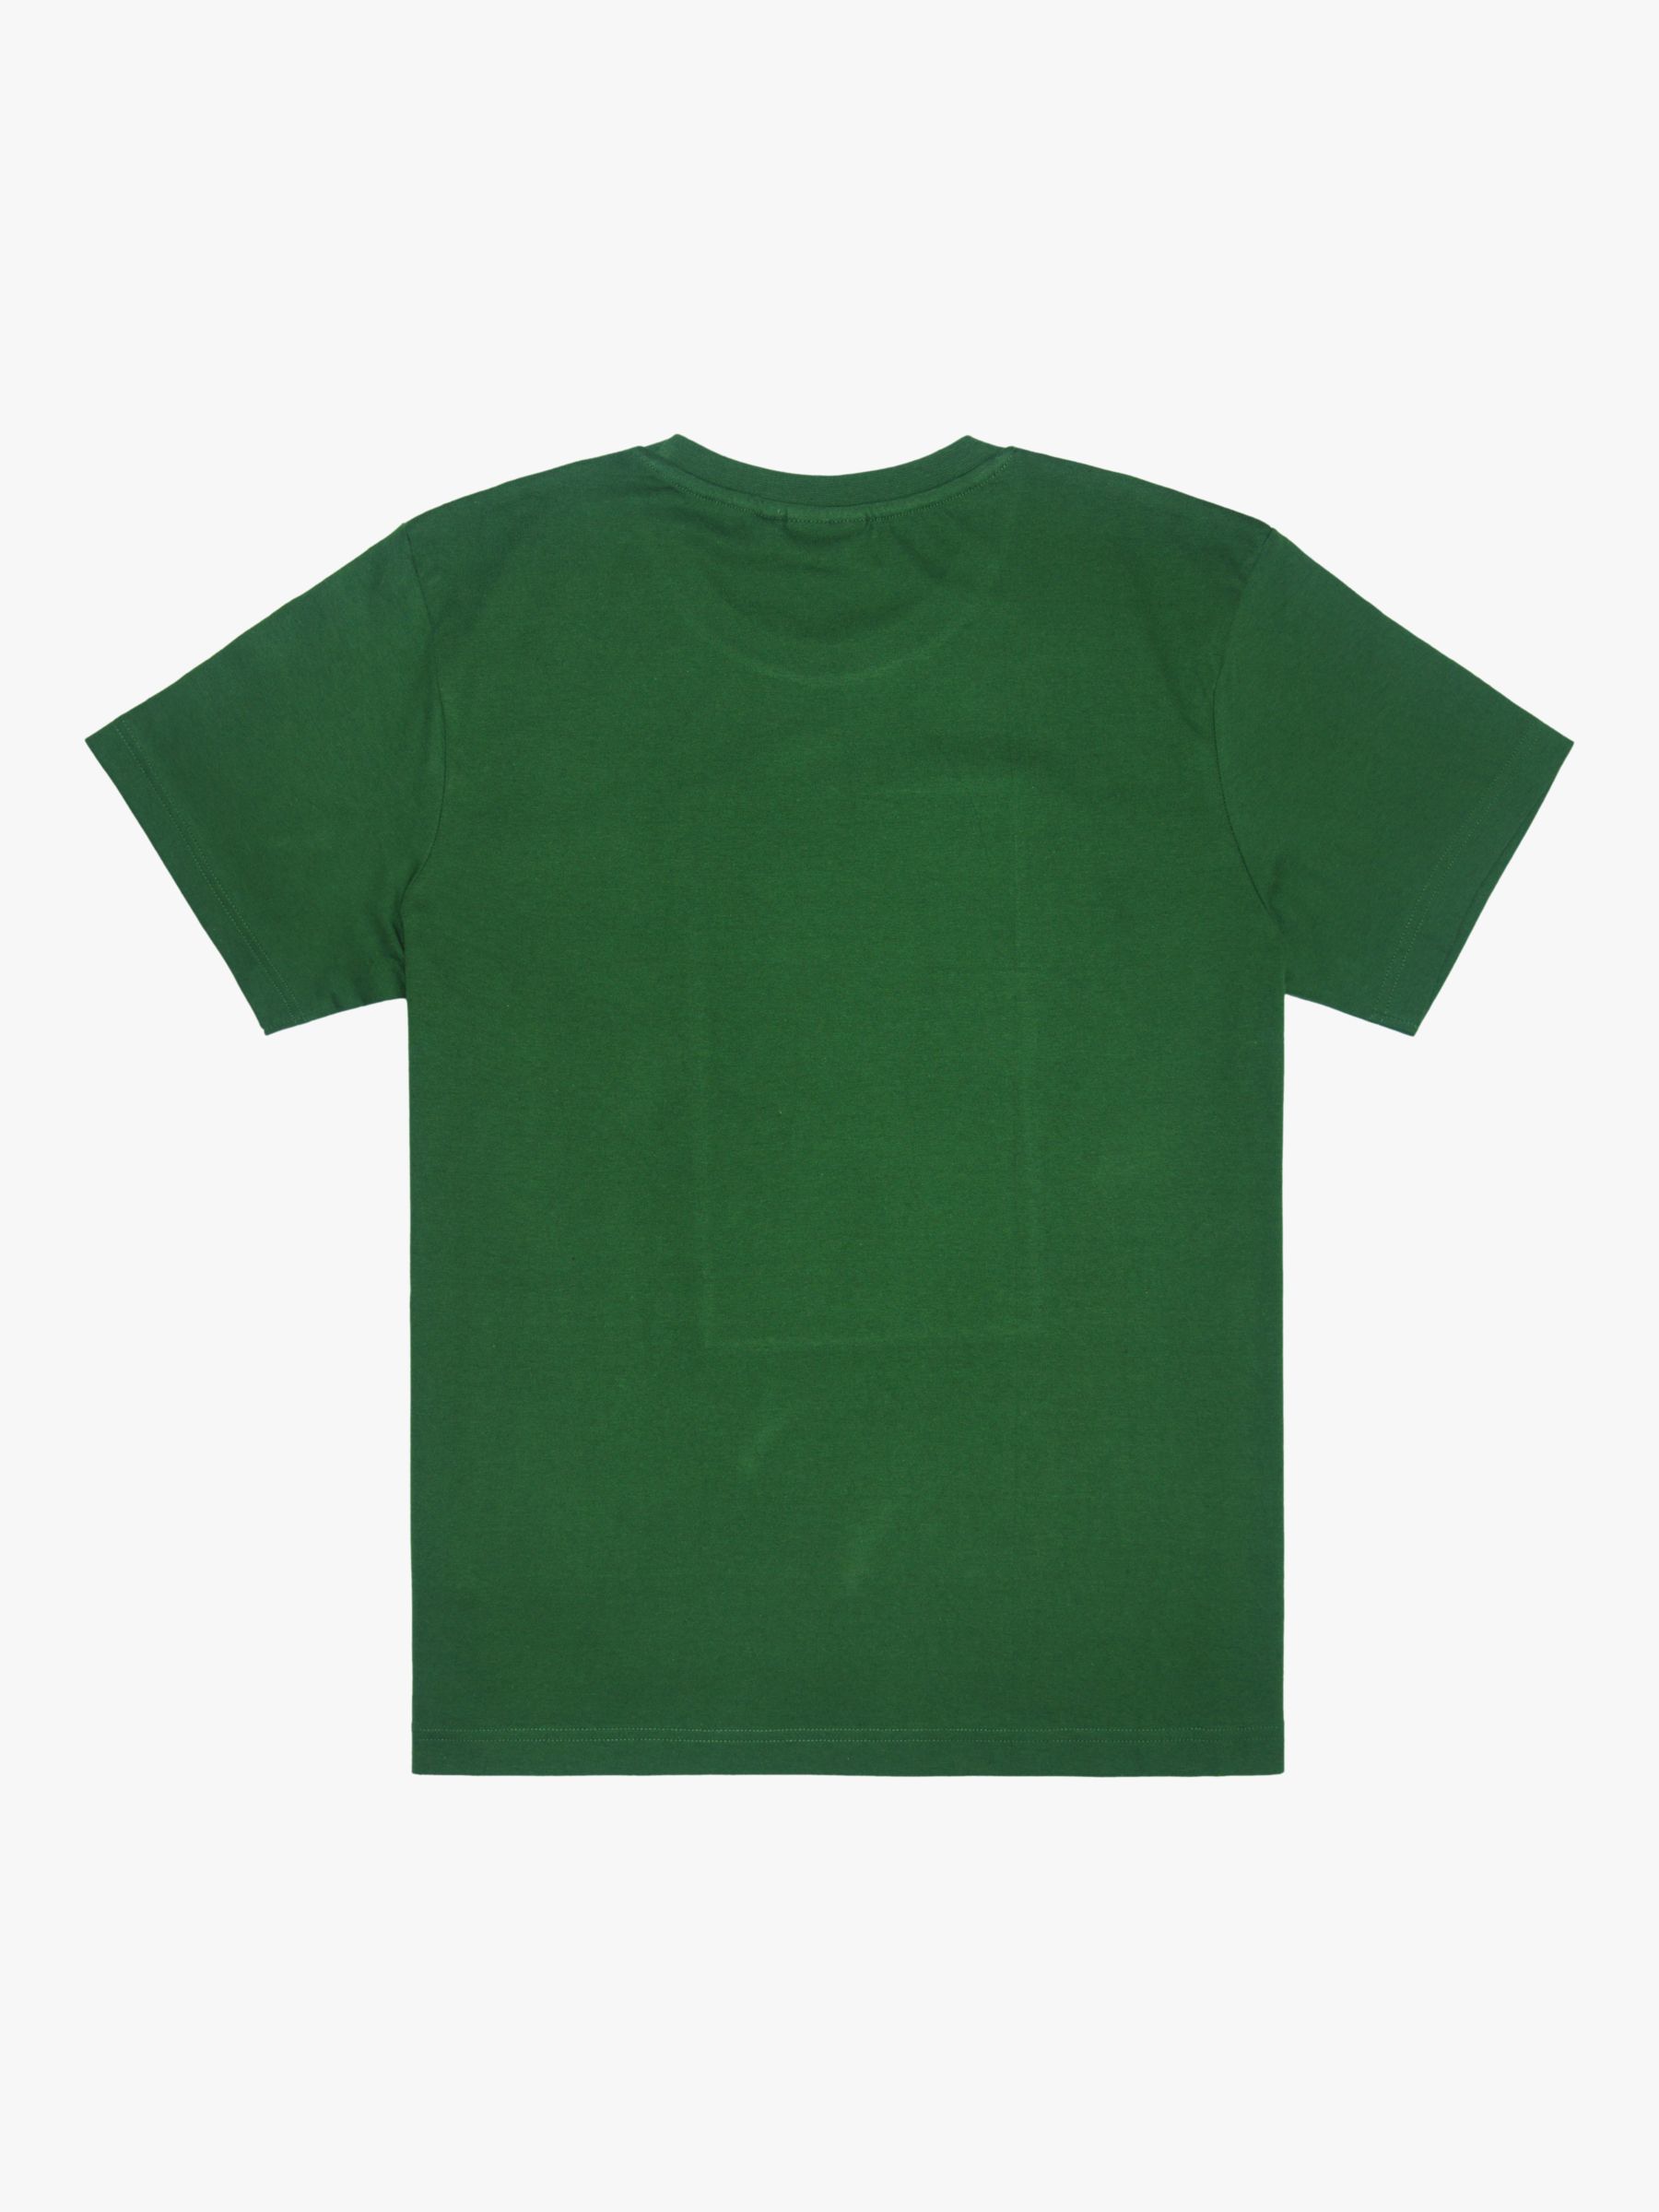 Fabric Flavours Harry Potter Reward T-Shirt, Green, S